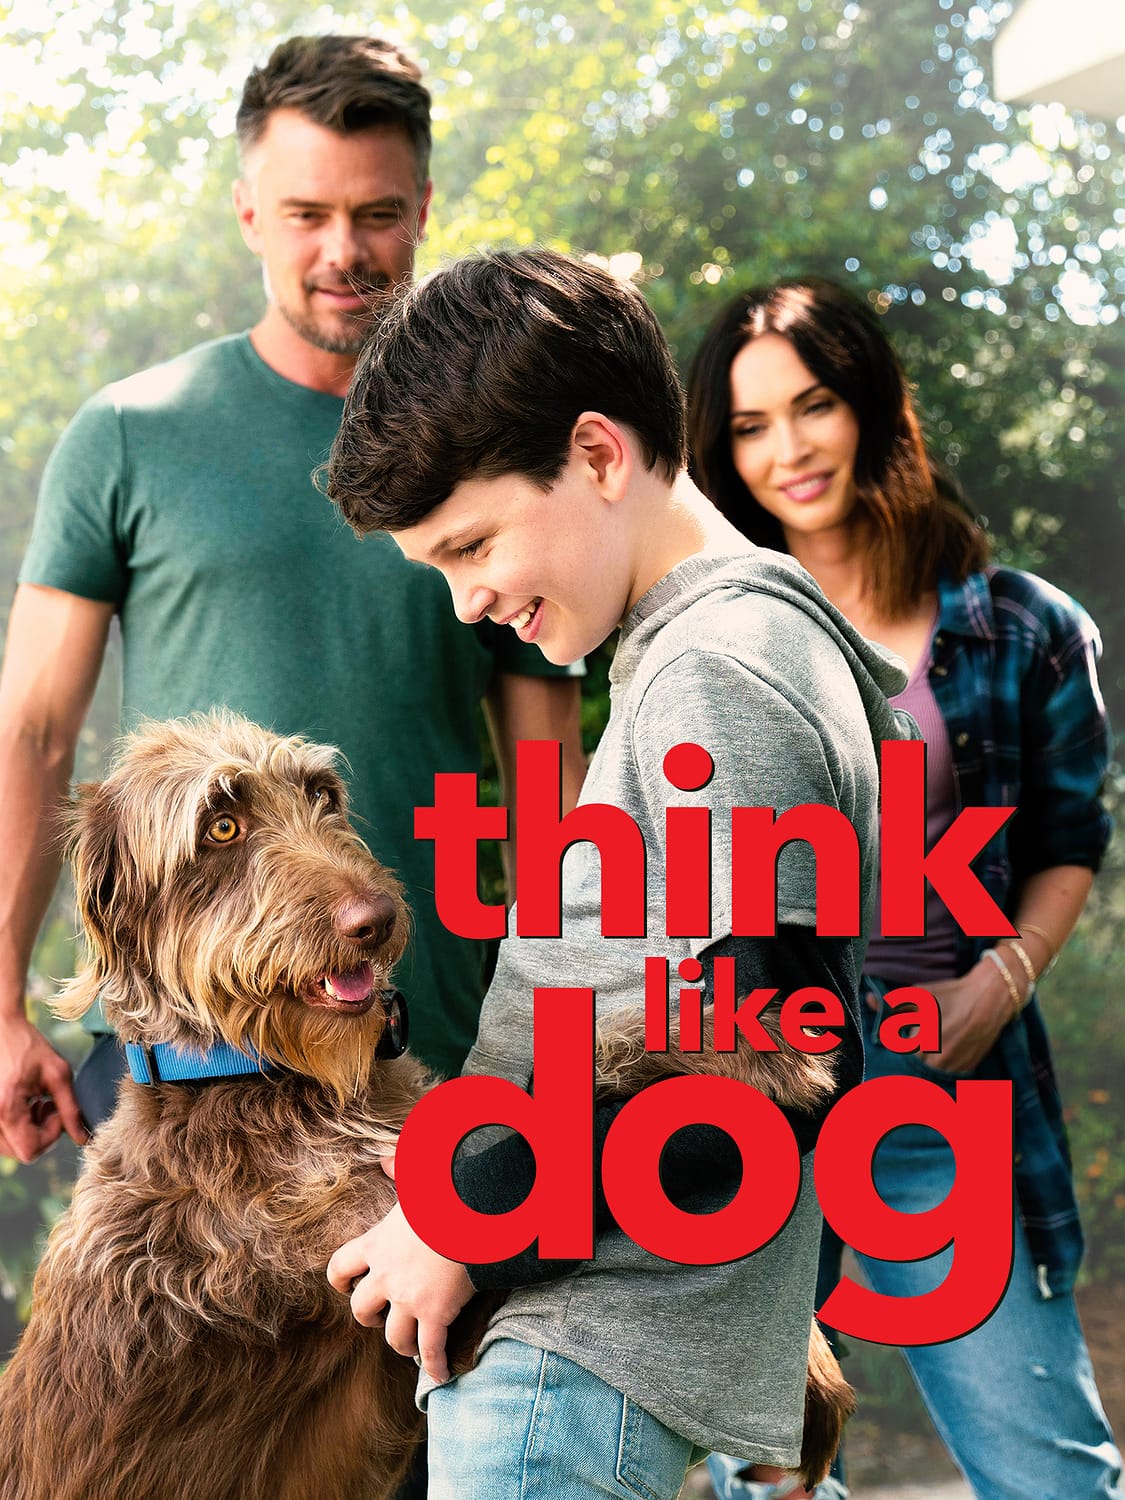 Think Like a Dog คู่คิดสี่ขา (2020) NETFLIX บรรยายไทย